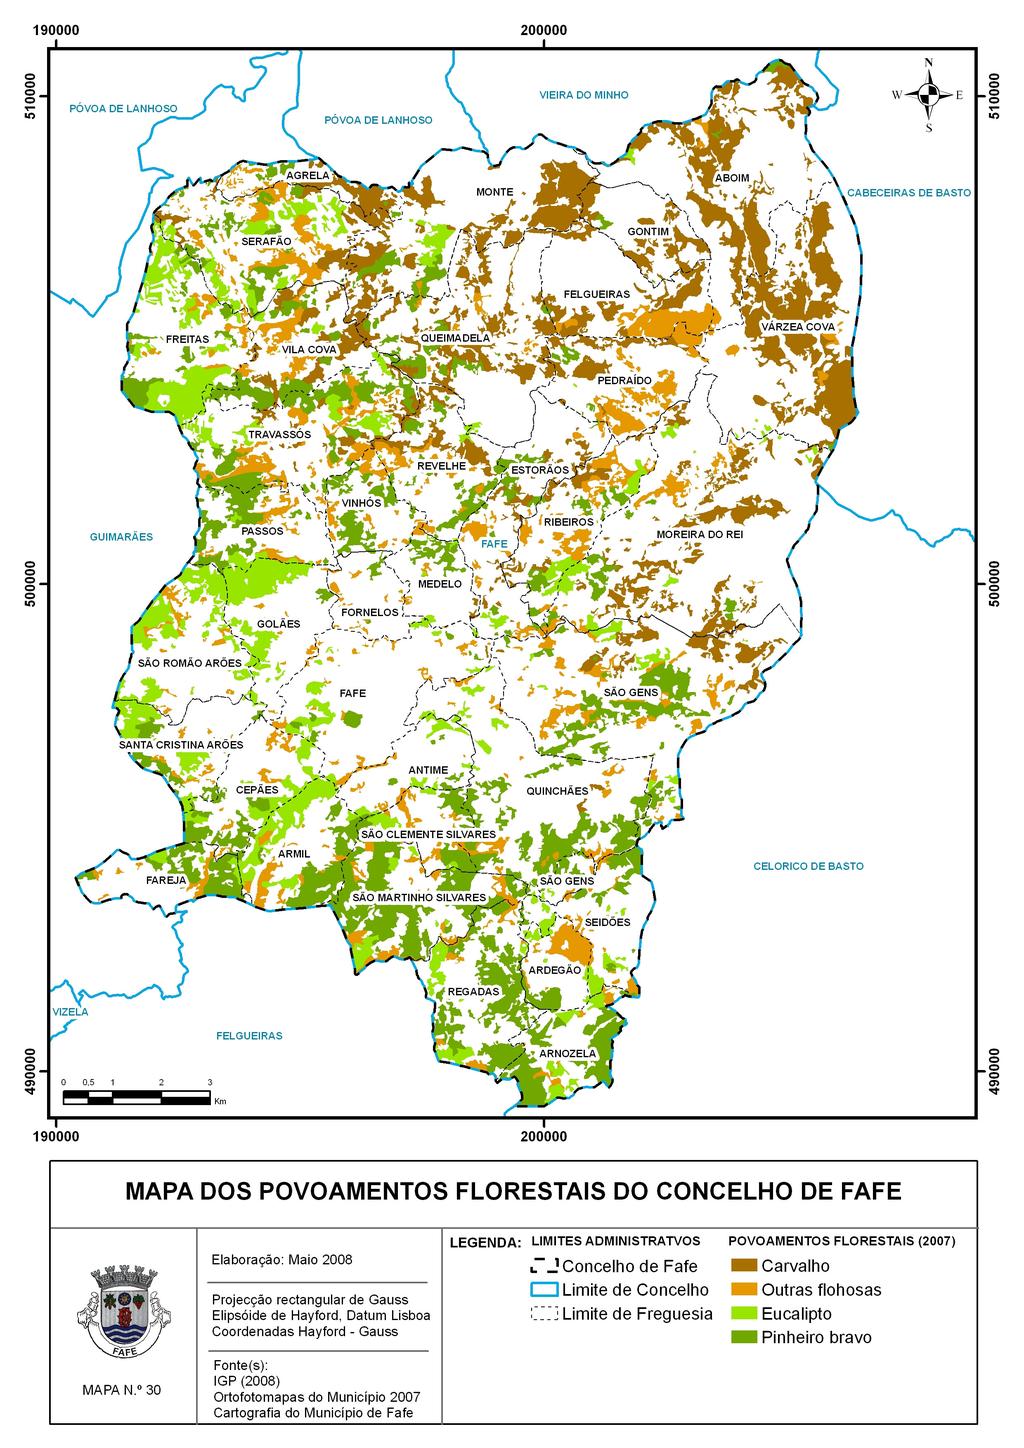 Plano Municipal de Defesa da Floresta Contra Incêndios de Fafe Figura n.º 4.6 Mapa n.